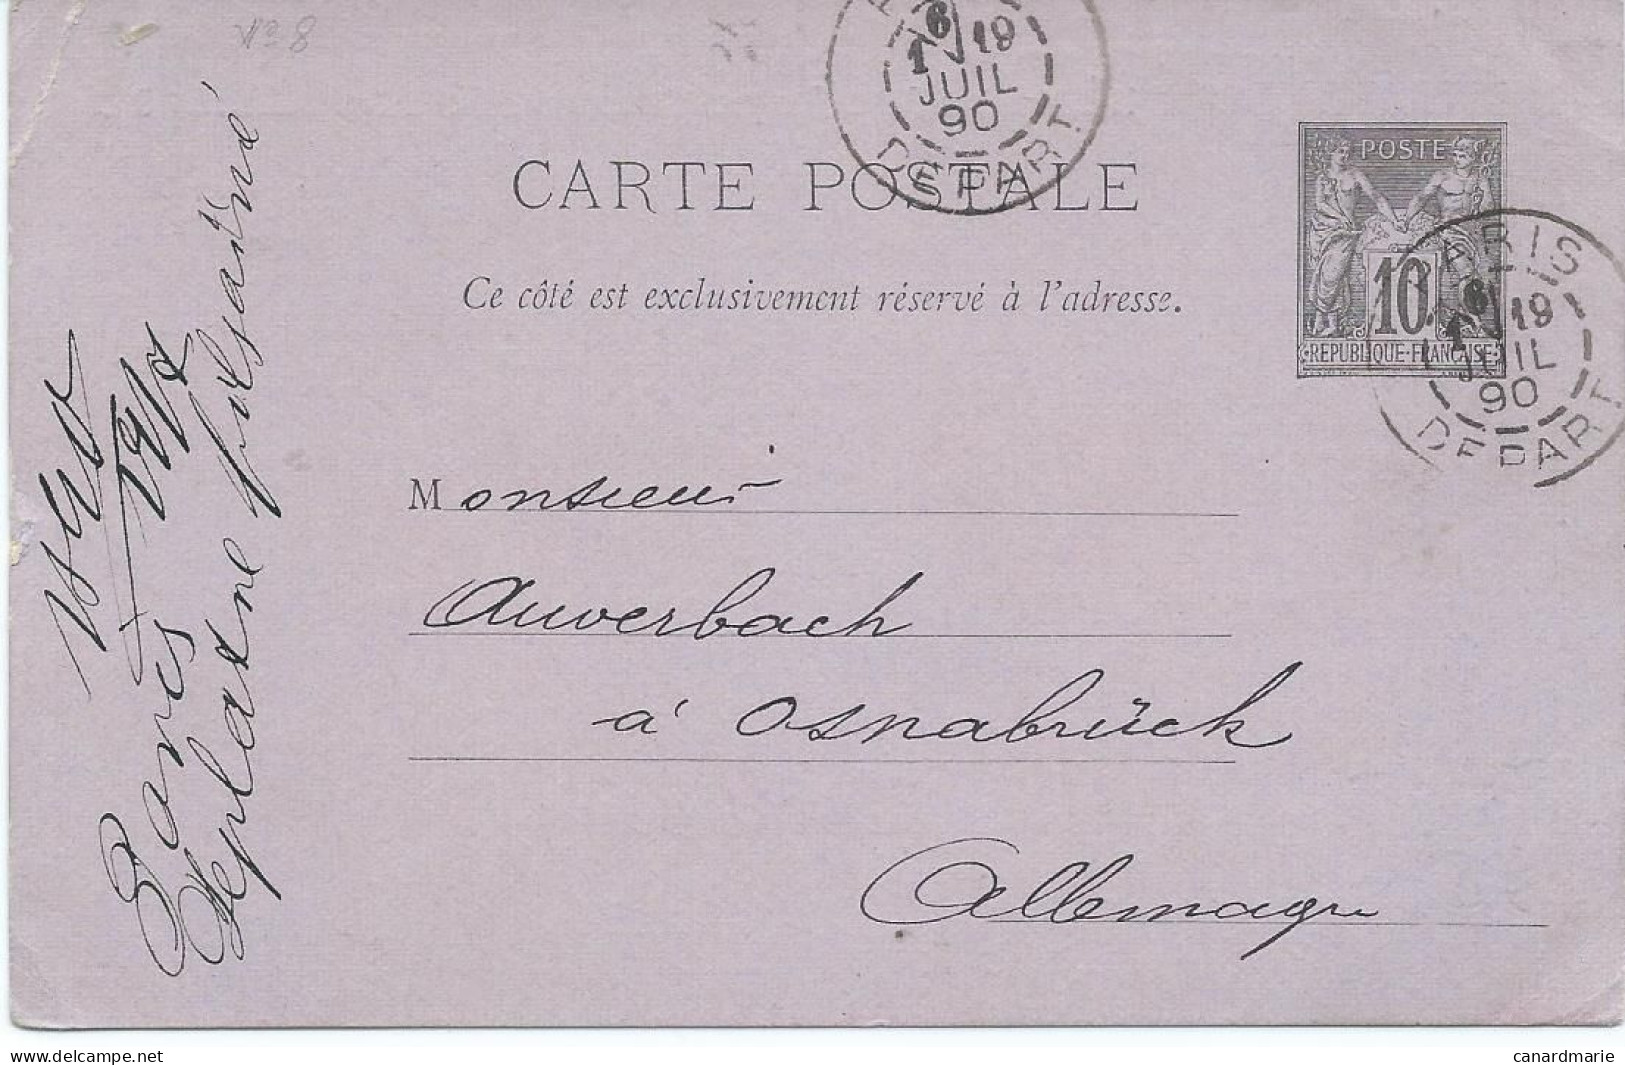 CARTE POSTALE 10 CT SAGE 1890 AVEC REPIQUAGE LEPLATRE FILS AINE PARIS - Overprinter Postcards (before 1995)